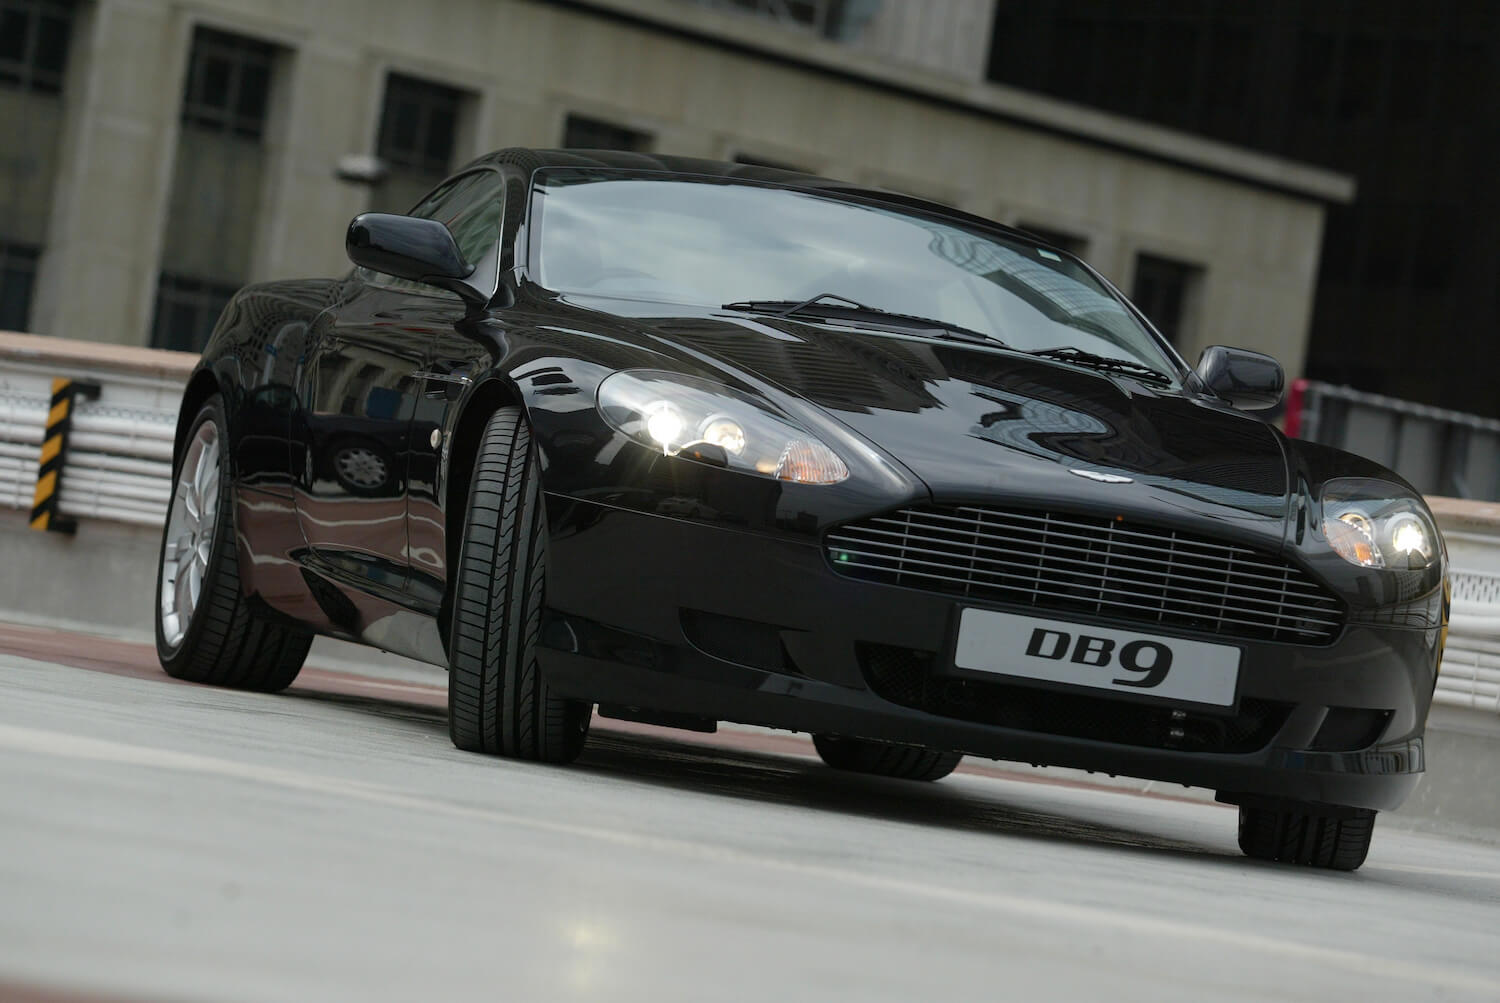 A black Aston Martin DB9 car in a parking lot.